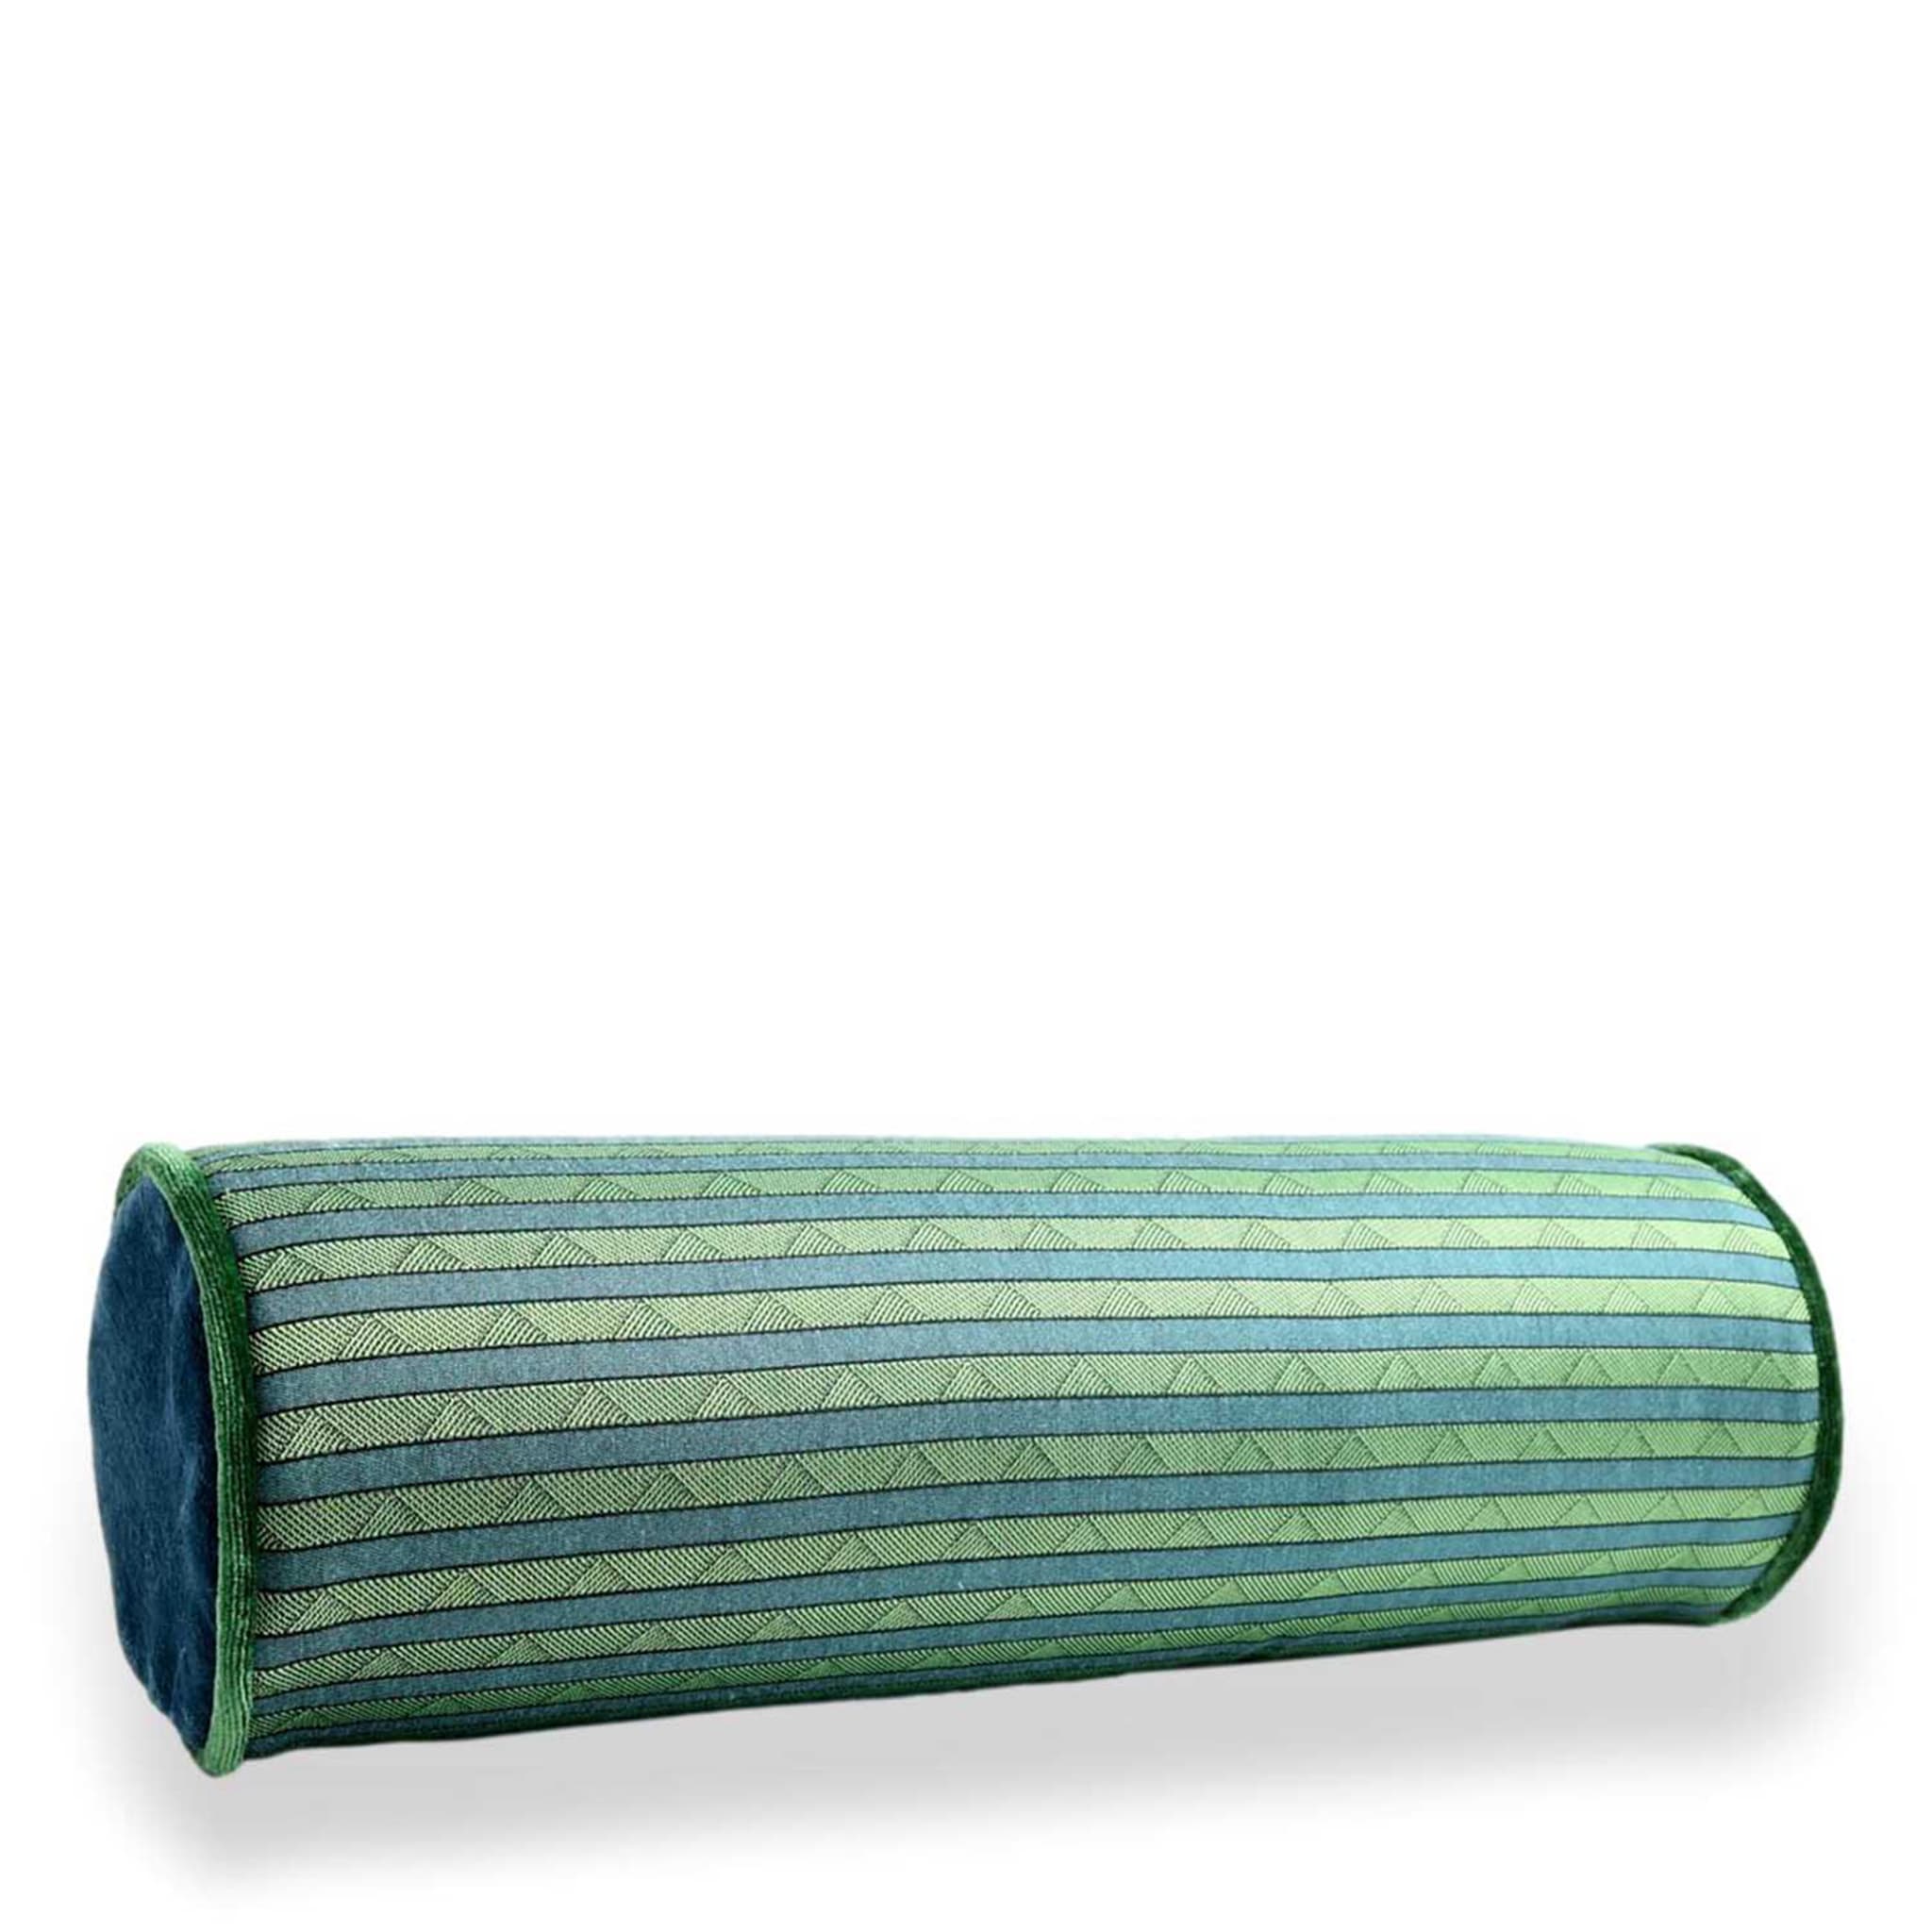 Emerald Roll Rullo Cushion - Alternative view 1